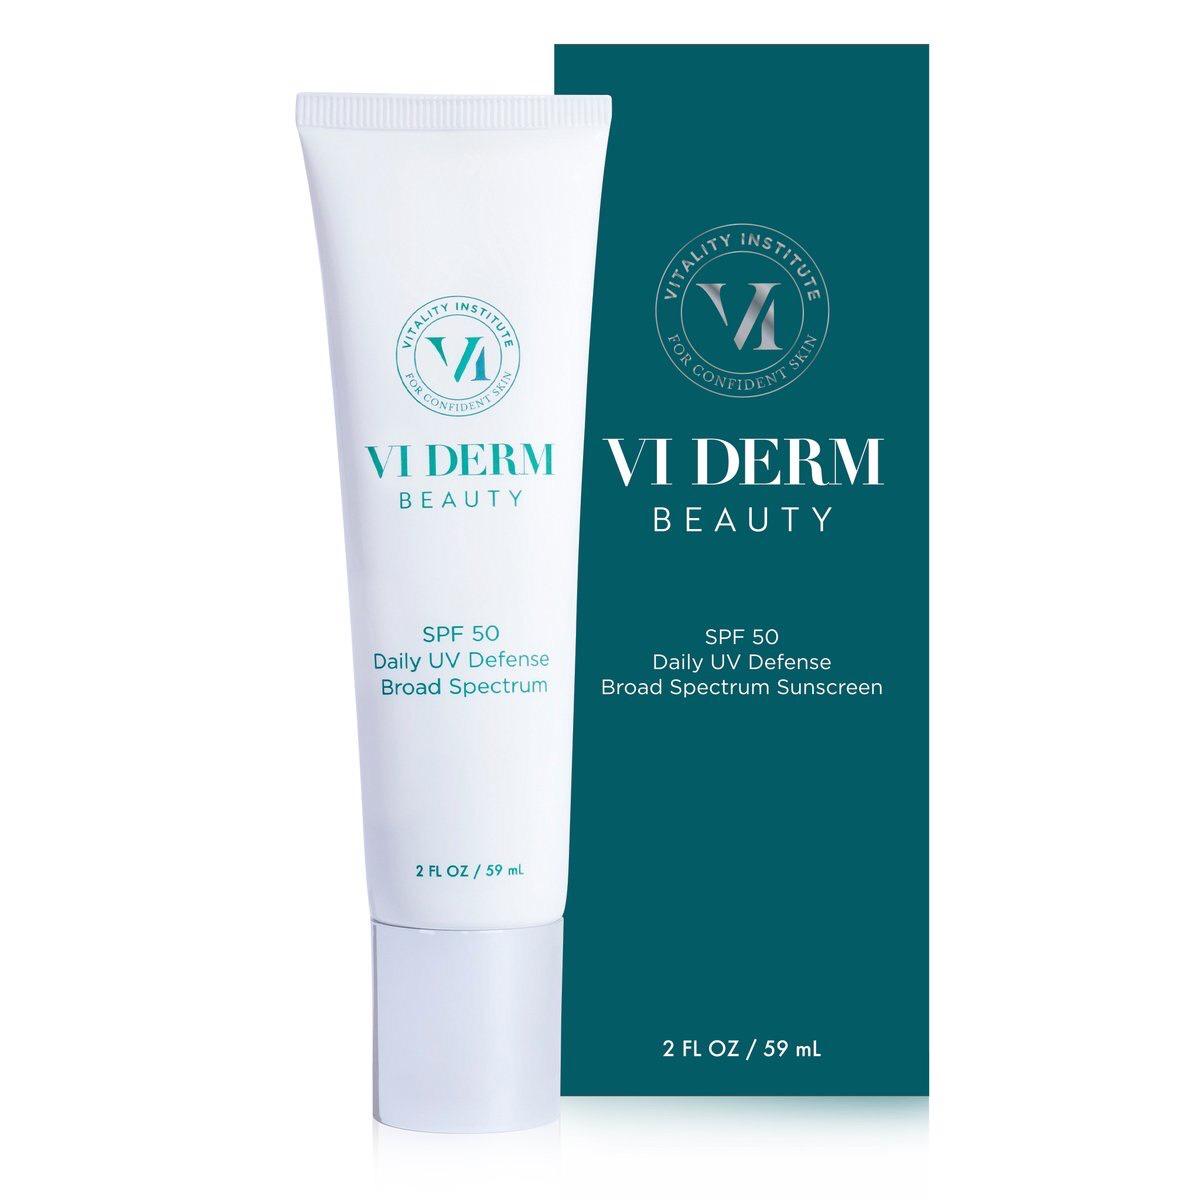 VI Derm Daily UV Defense Broad Spectrum Sunscreen SPF 50